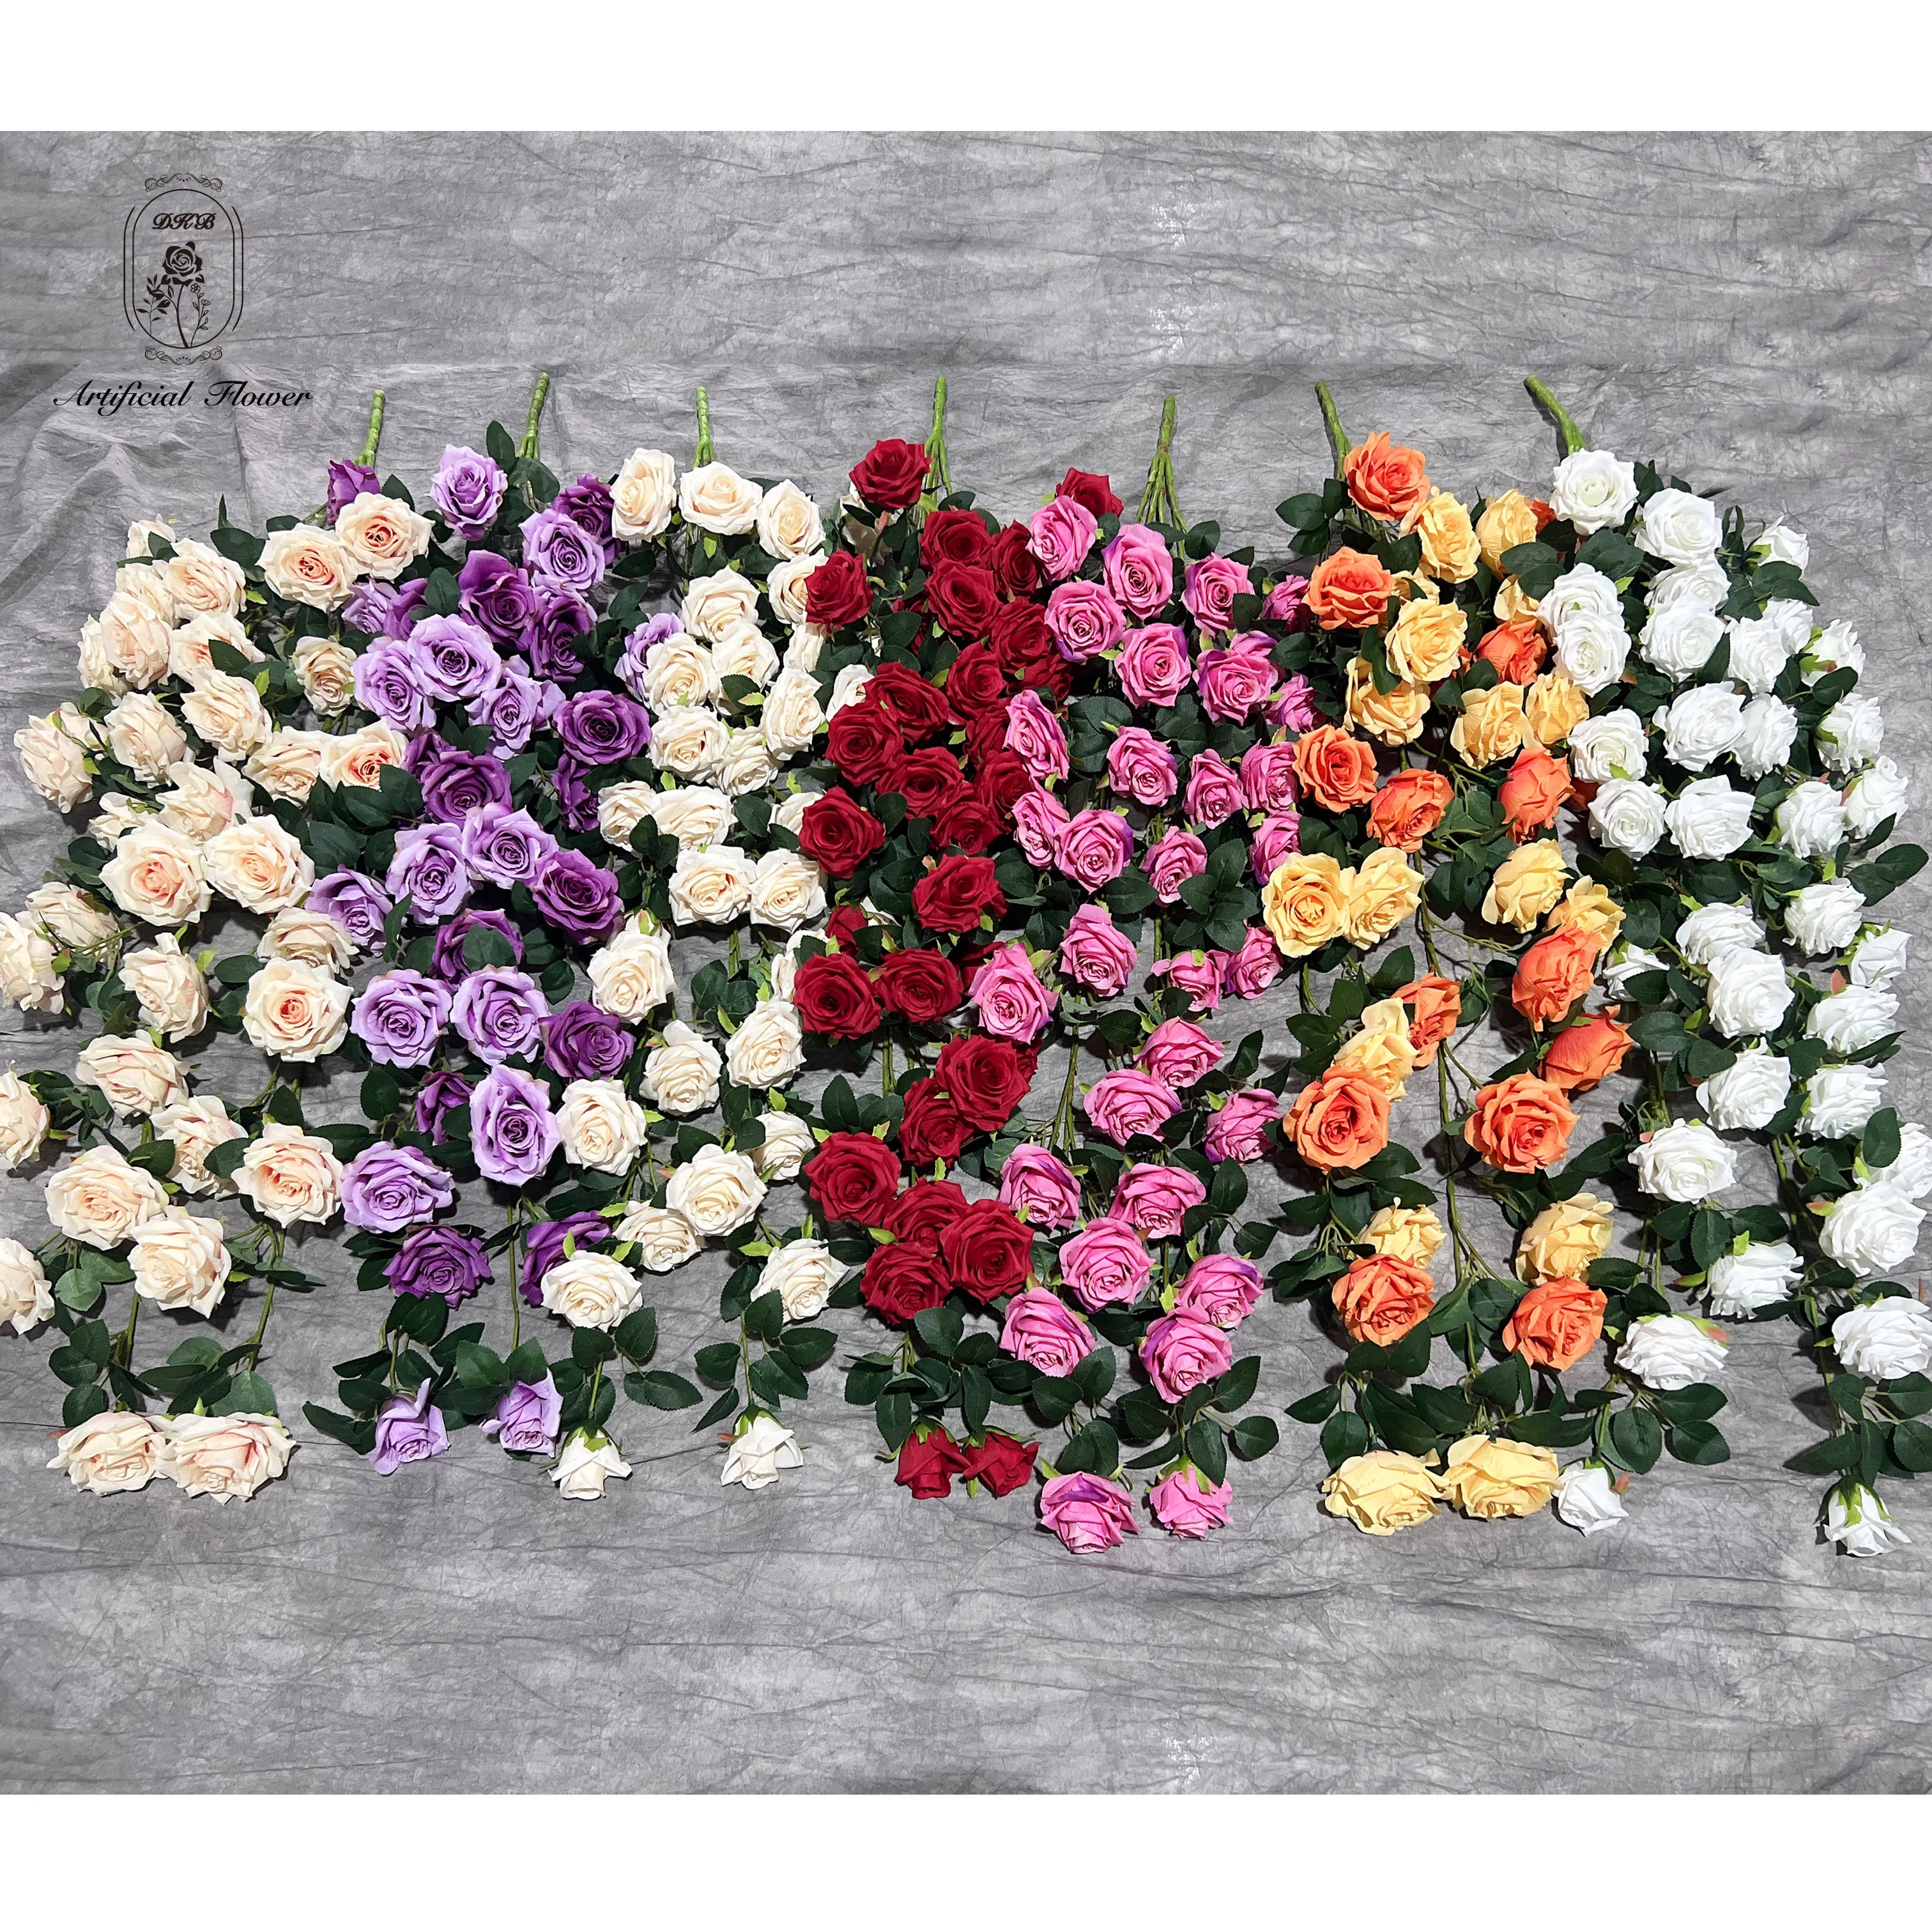 

Factory High Quality Artificial Silk Hanging Wisteria Flower Vines Flower Garlands For Wedding Events Home Decor